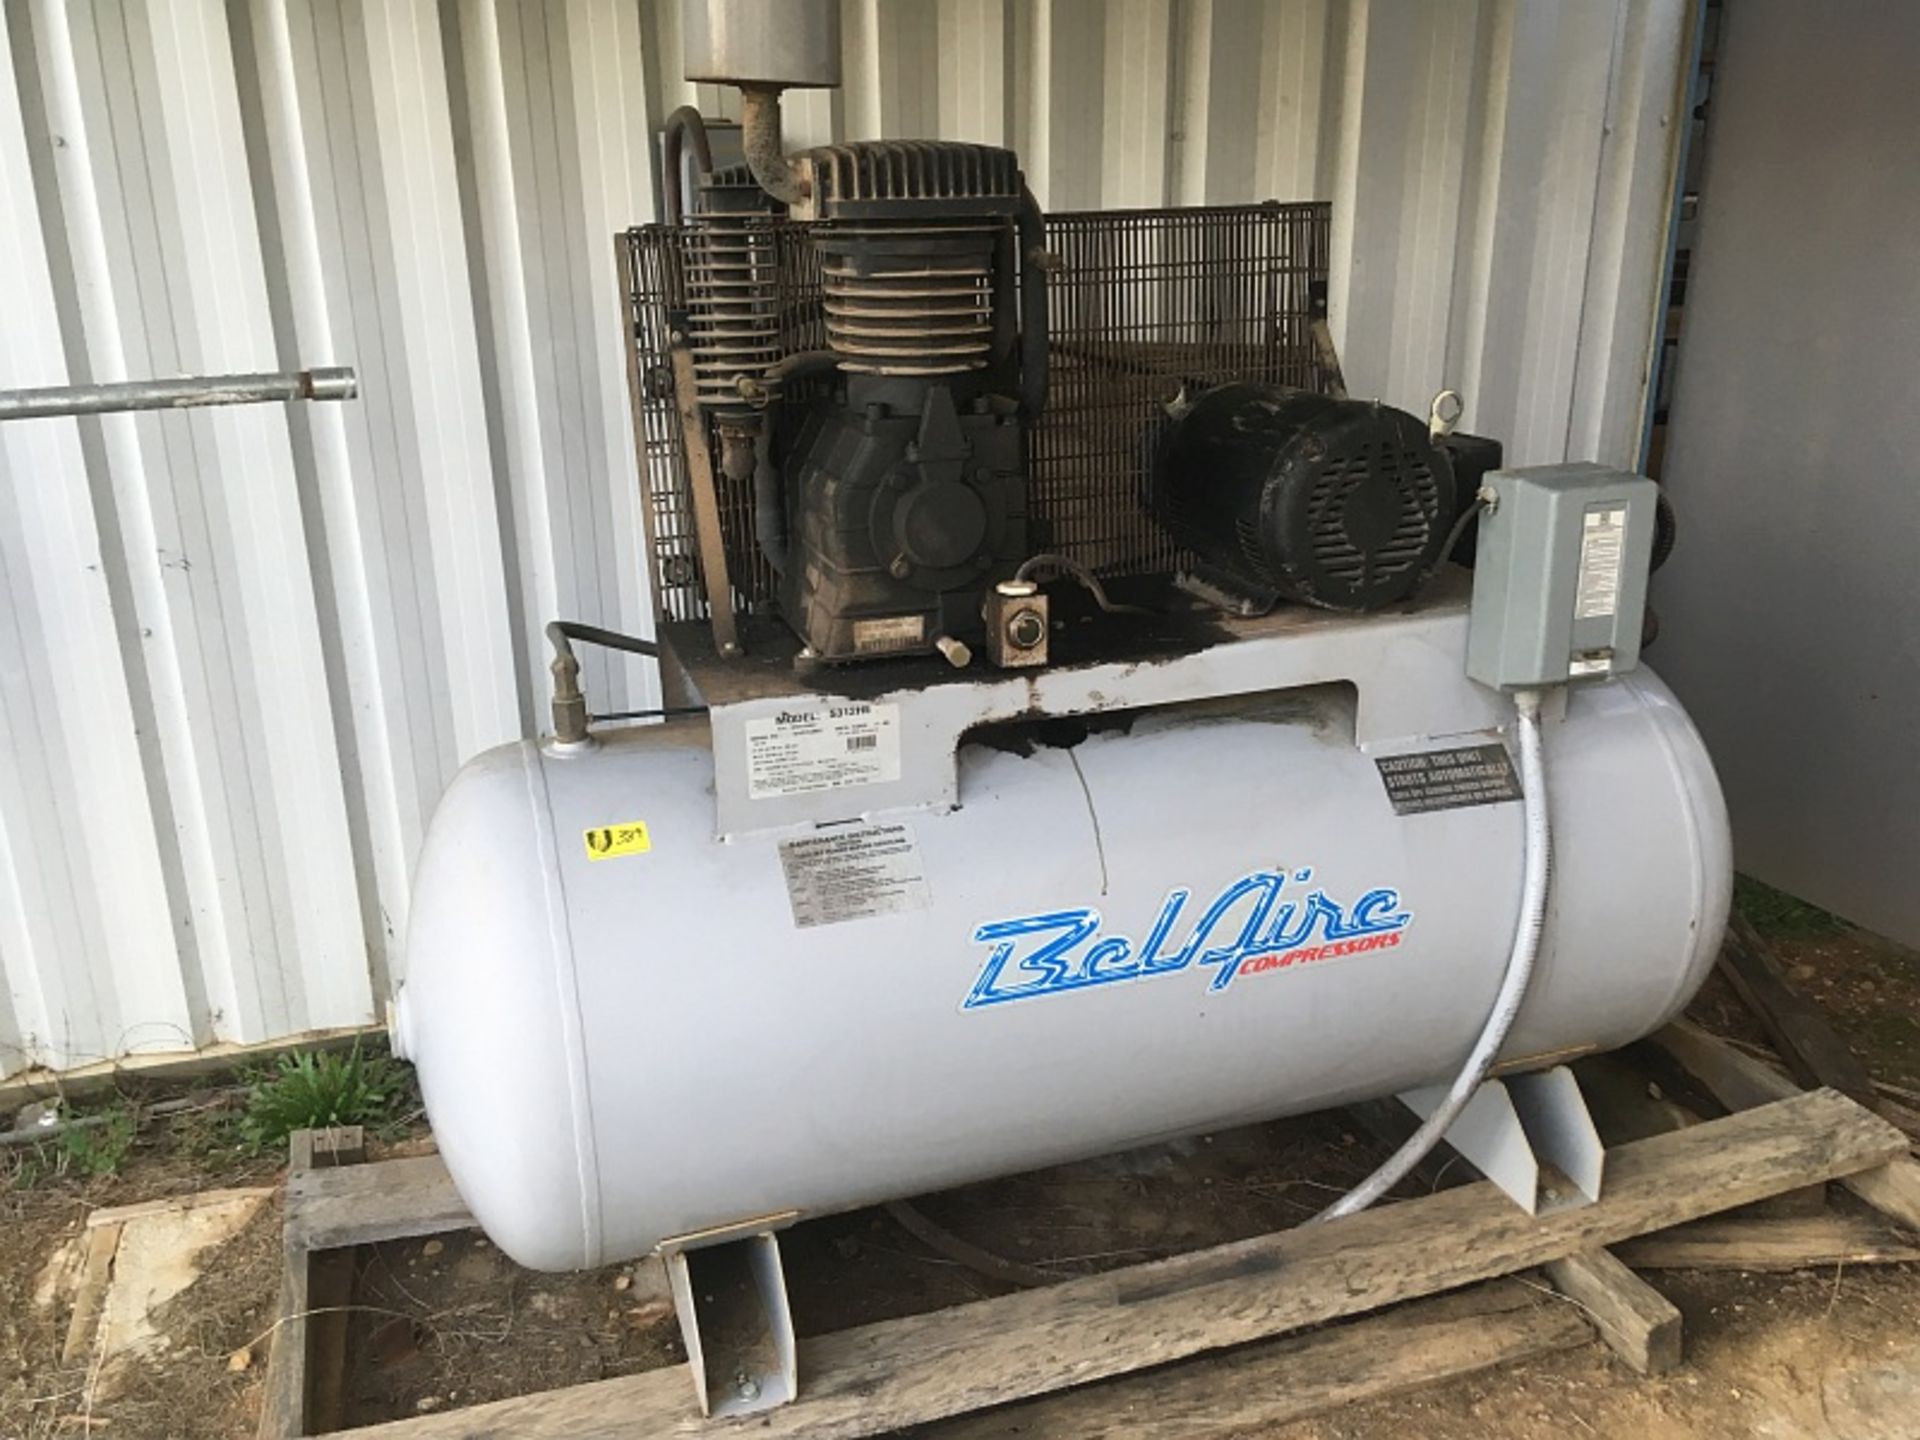 Bel Air Reciprocating Air Compressor, Mdl 5312HE, 10 HP, 175 PSI Max, w/ 110 gallon tank, SN